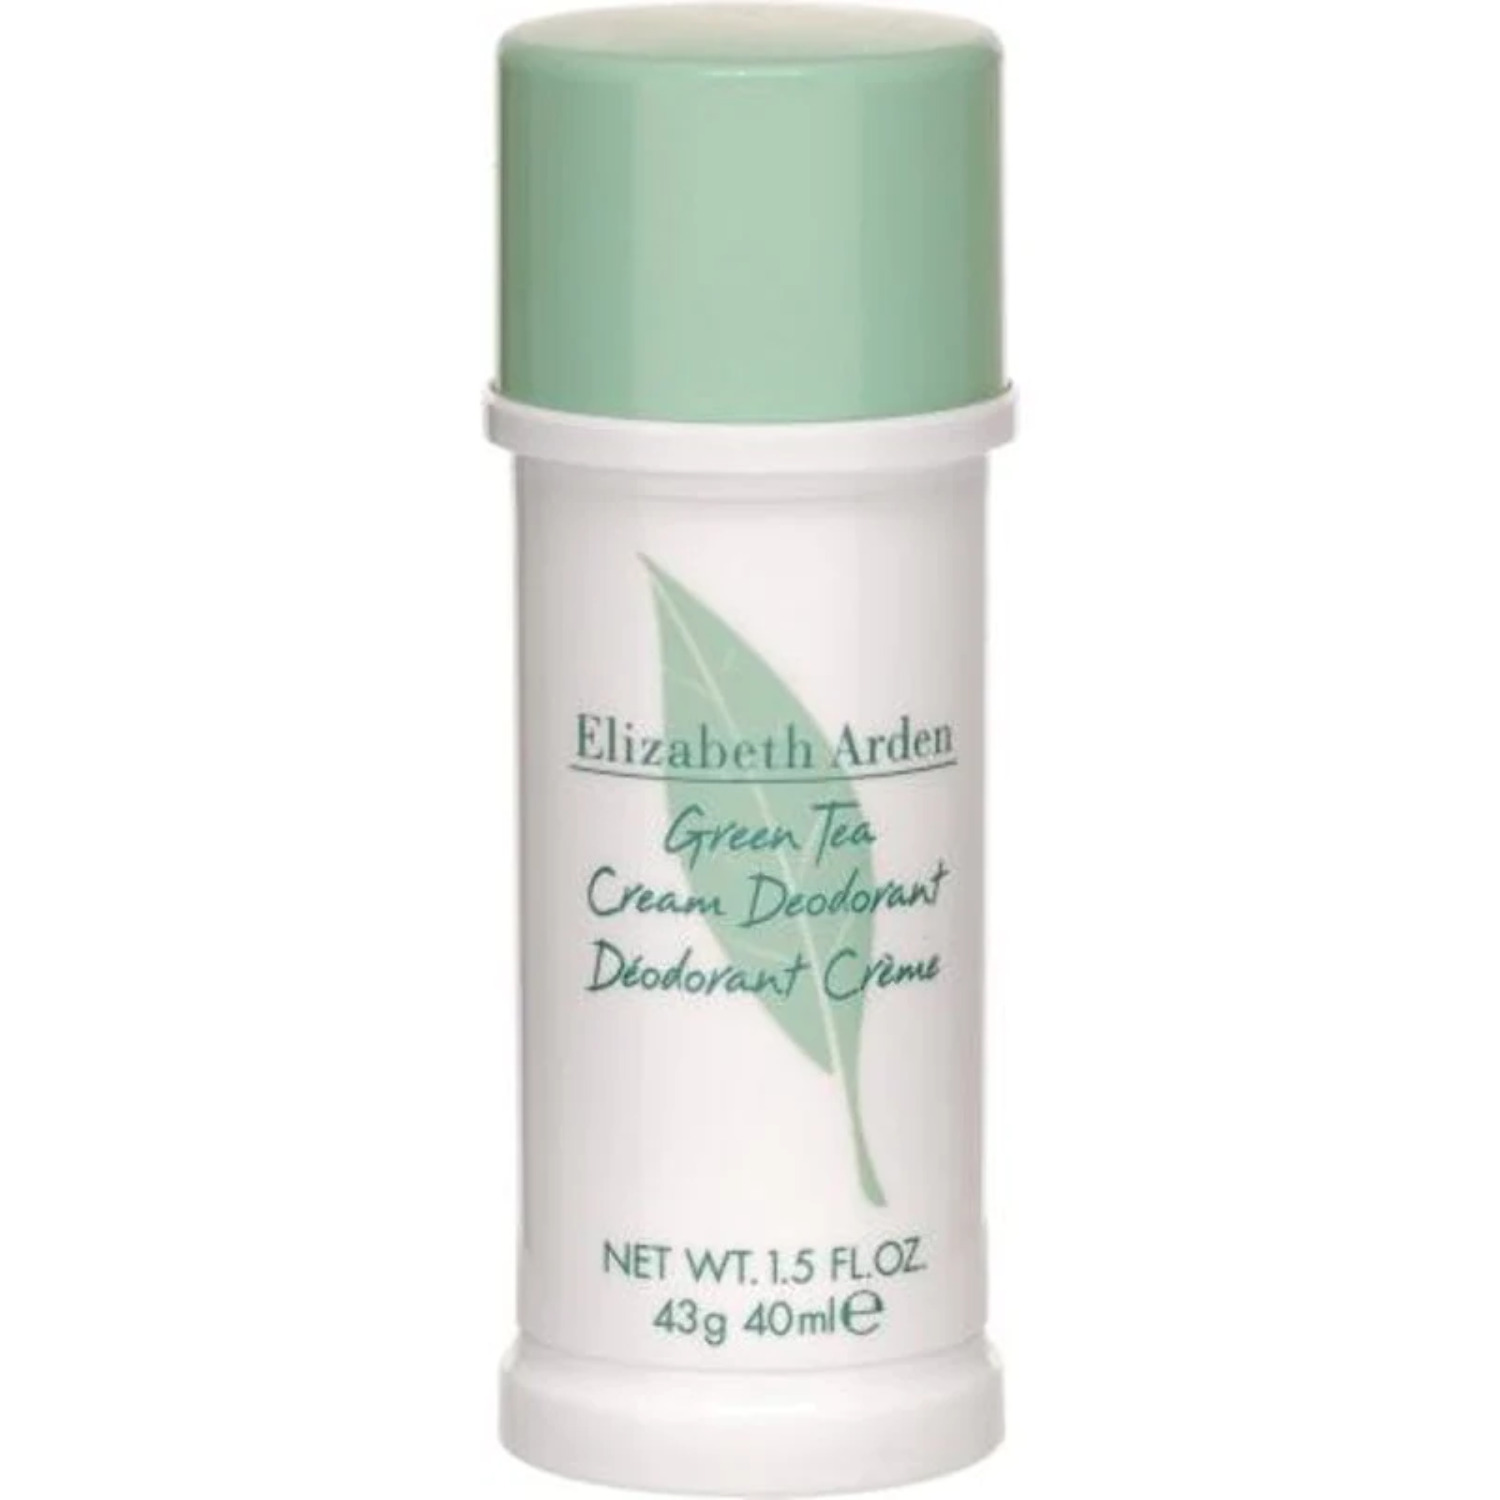 Green Tea by Elizabeth Arden for Women - 1.5 oz Cream Deodorant - image 3 of 3